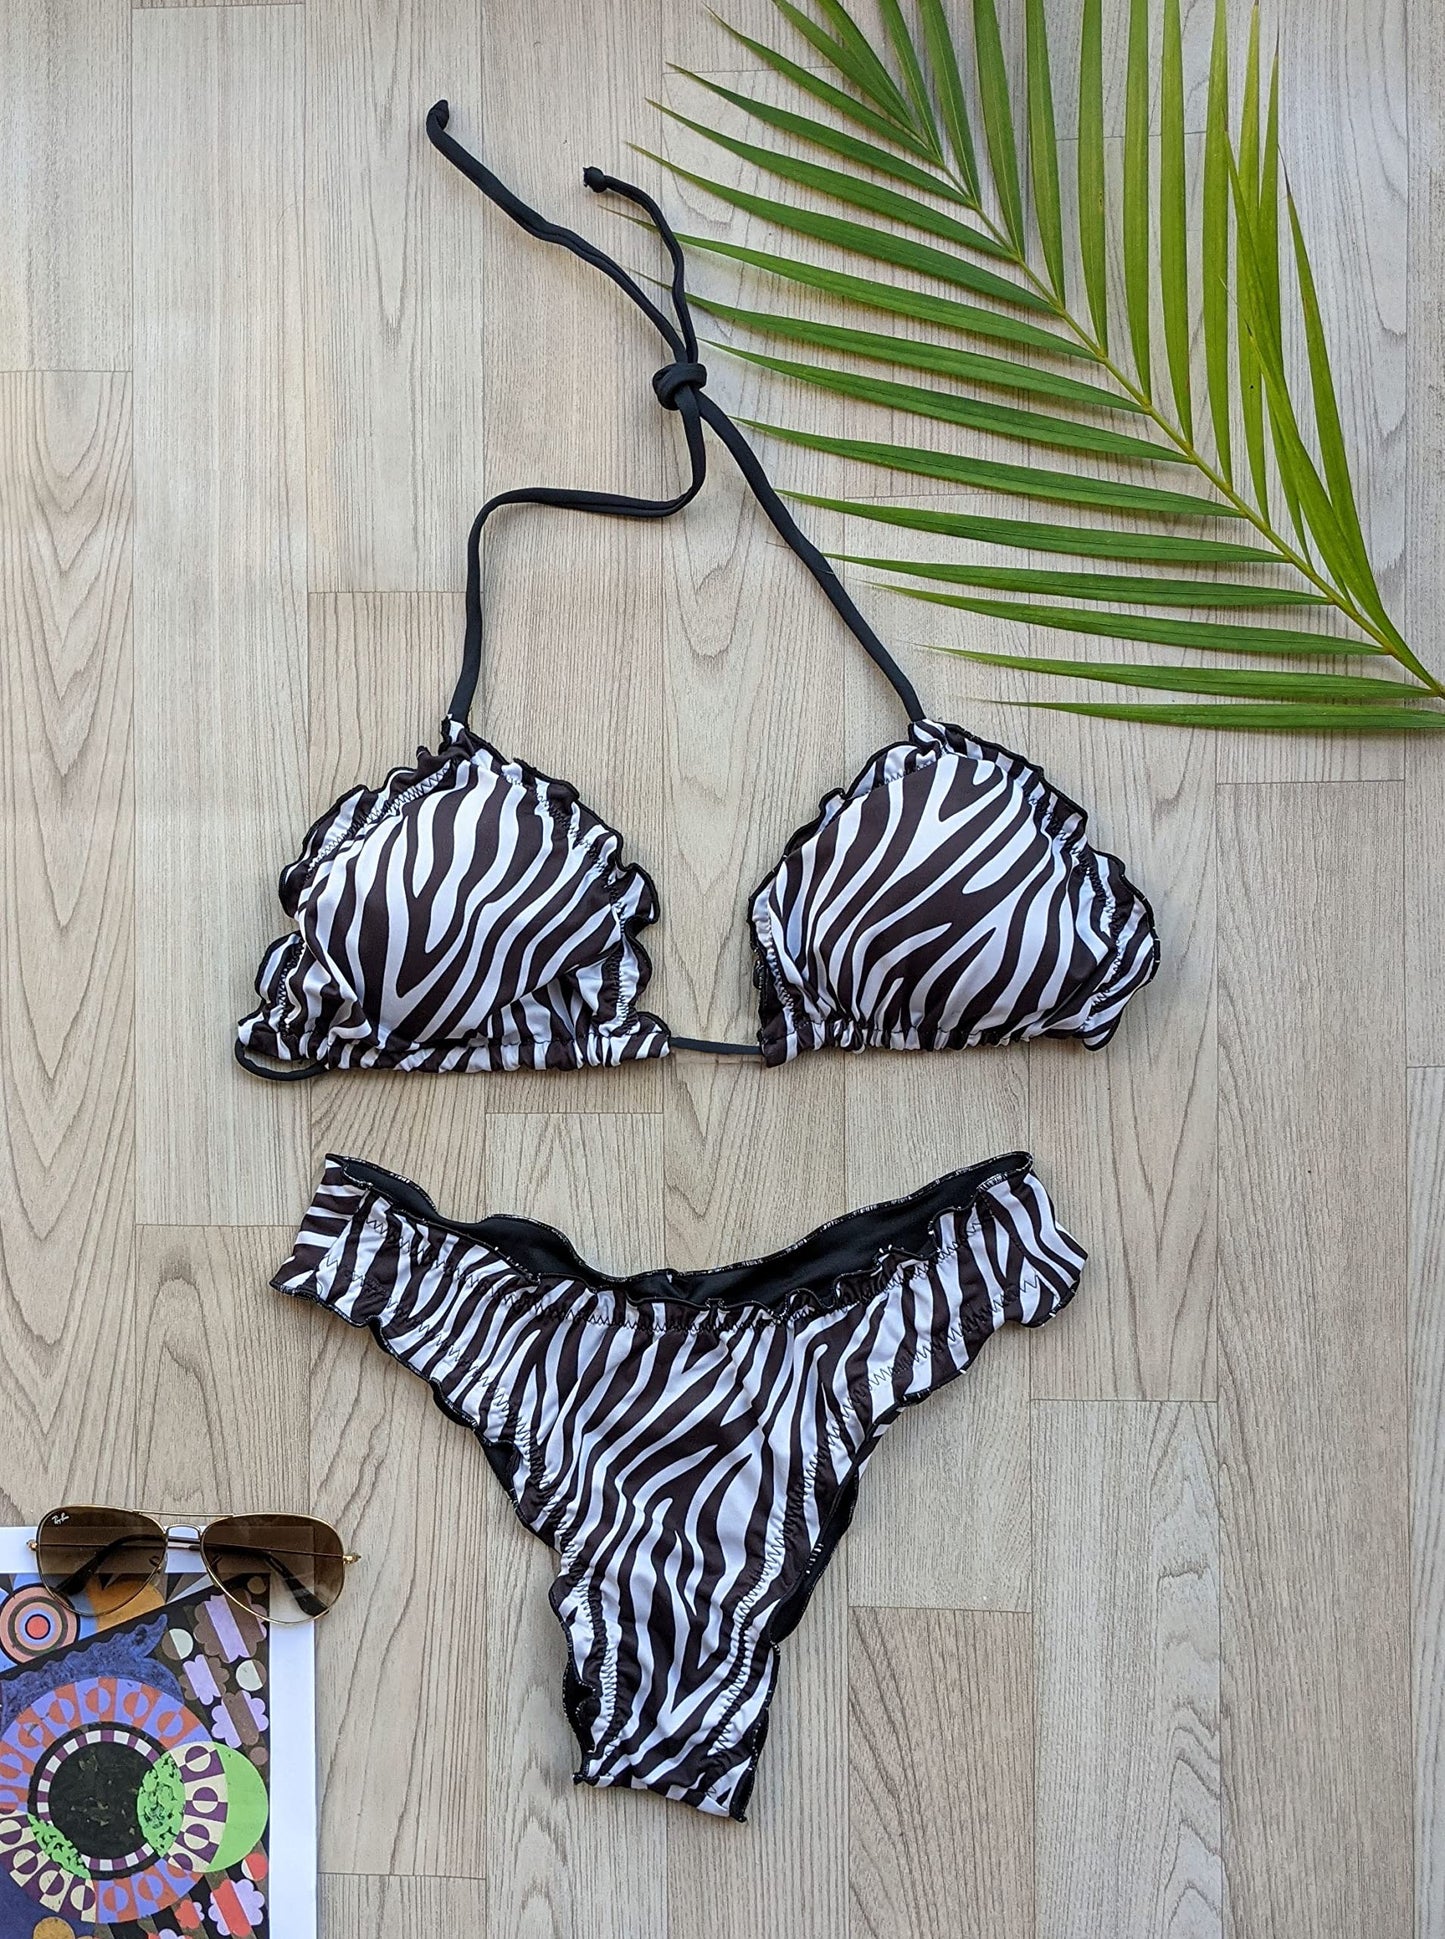 Brazilian Breeze Women's 2 Piece Swimsuit Rippled Double-Sided Halter String Triangle Top Cheeky Bikini Set Made in Brazil. (L, Zebra)